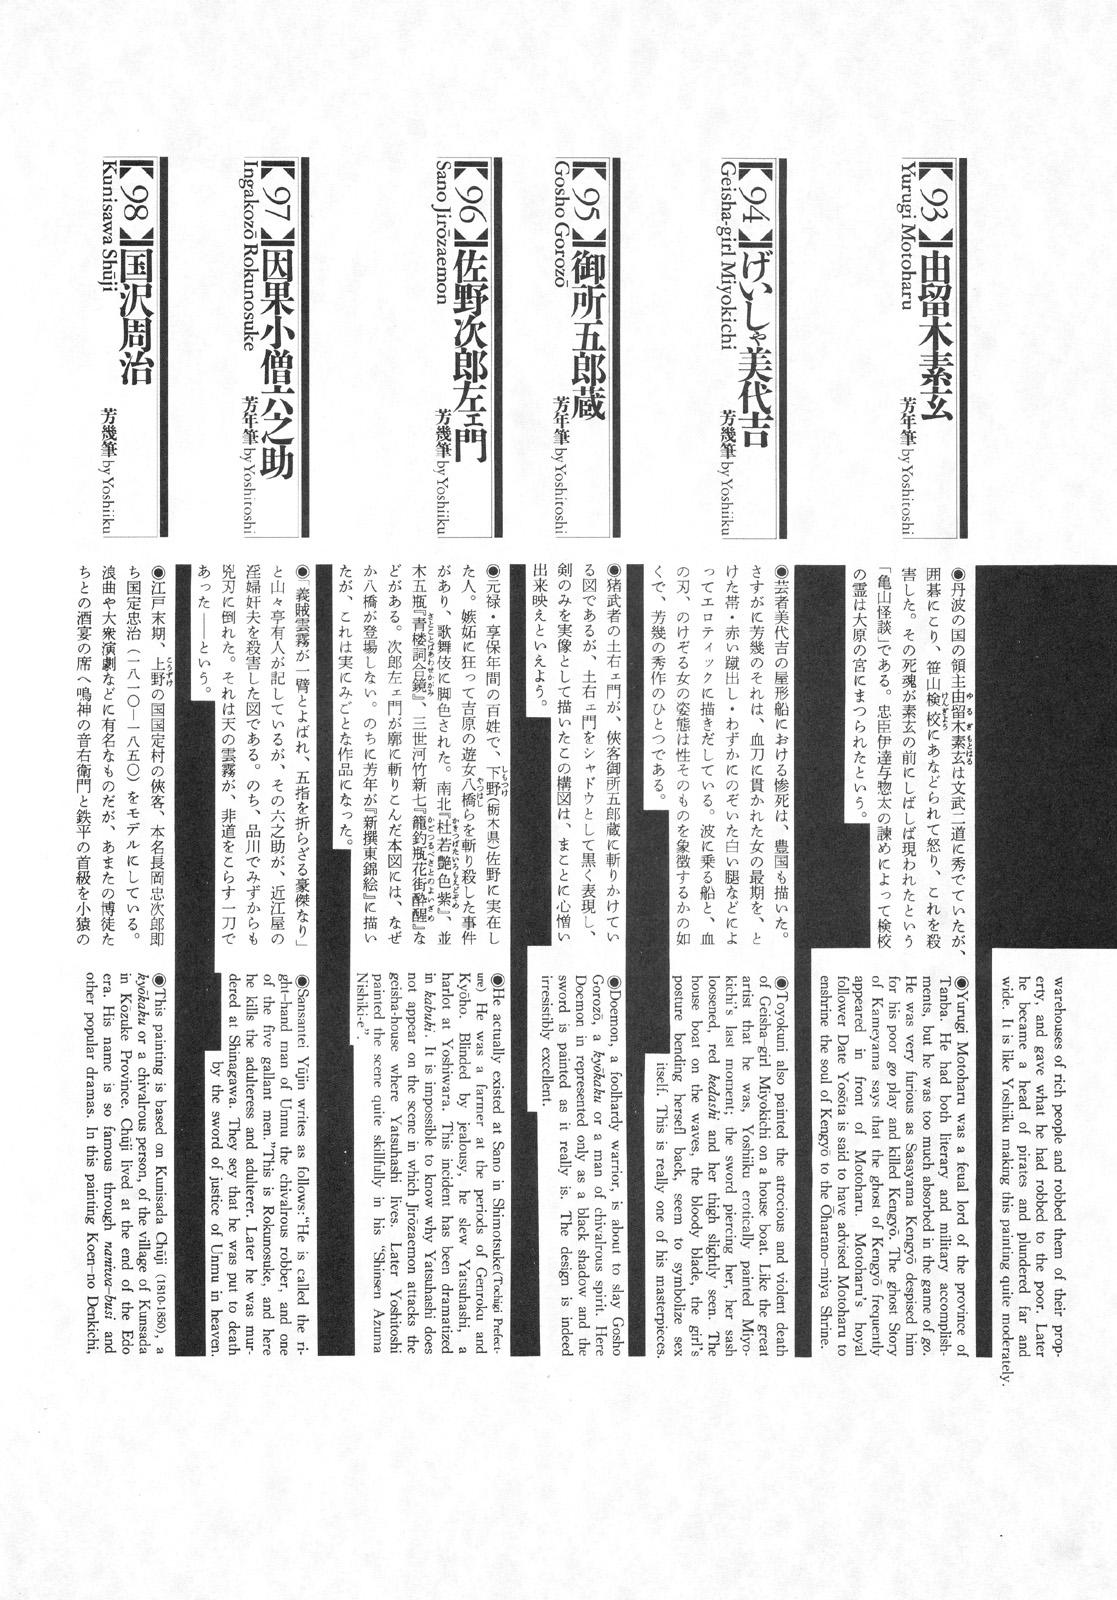 Ass Licking 江戸昭和競作 - Bloody Ukiyo-e in 1866 & 1988 Panocha - Page 104